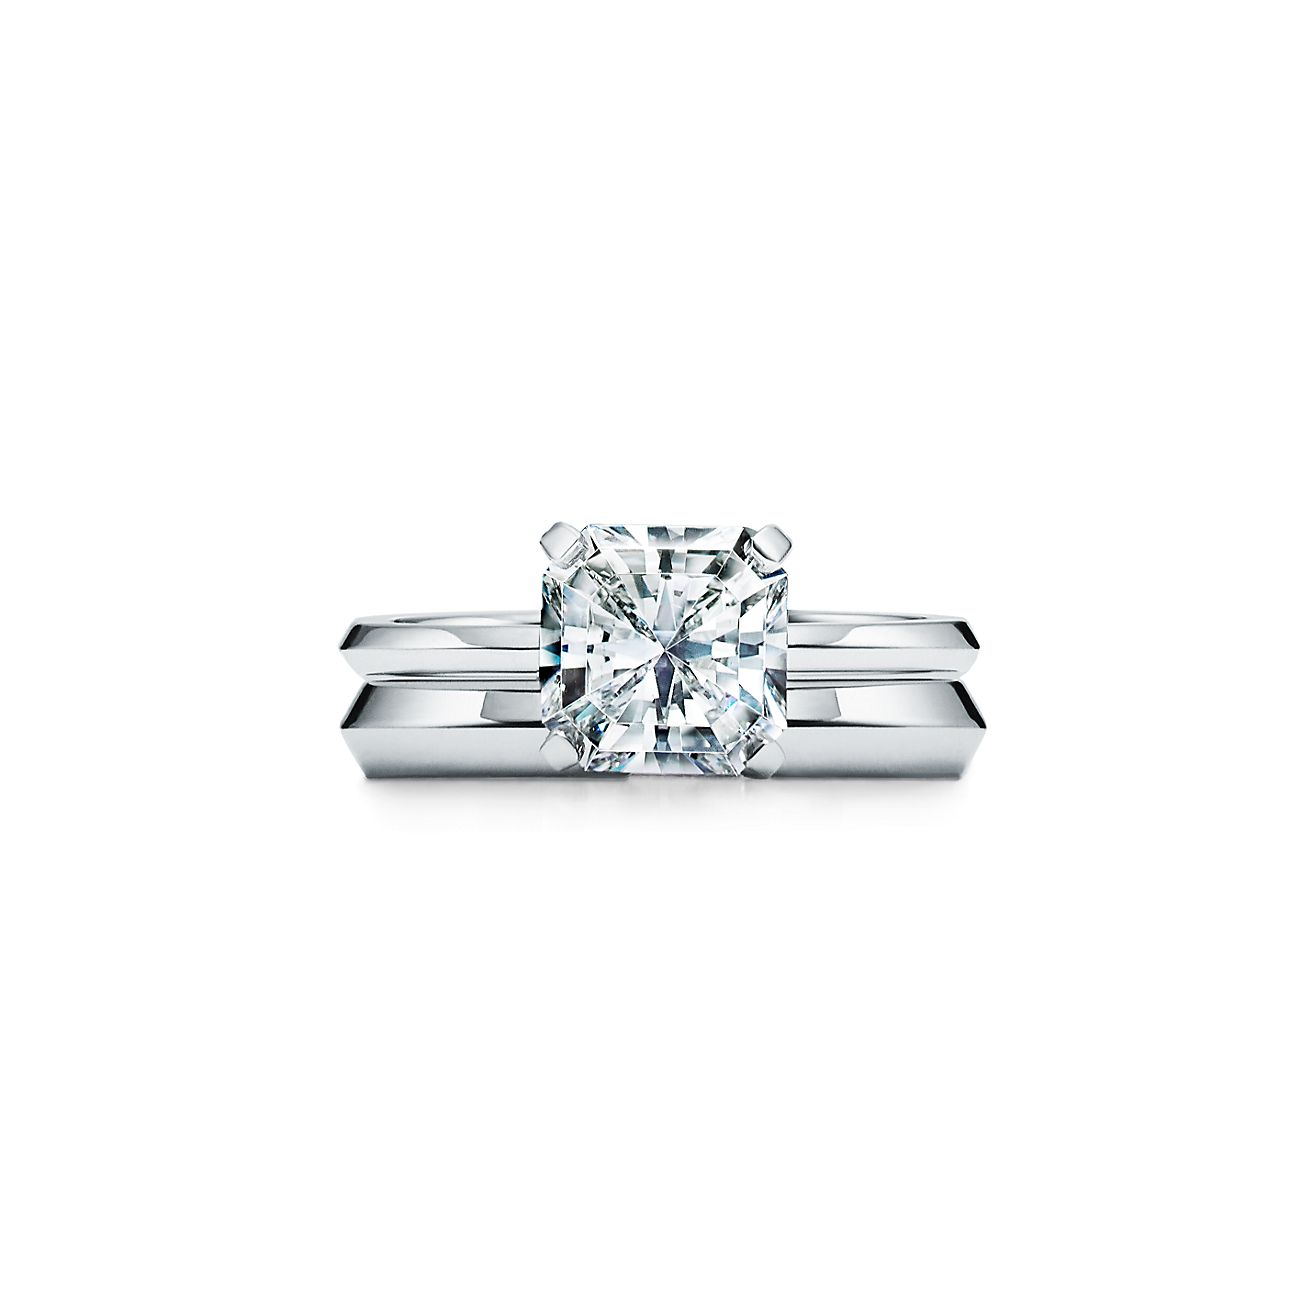 Tiffany True® engagement ring in 